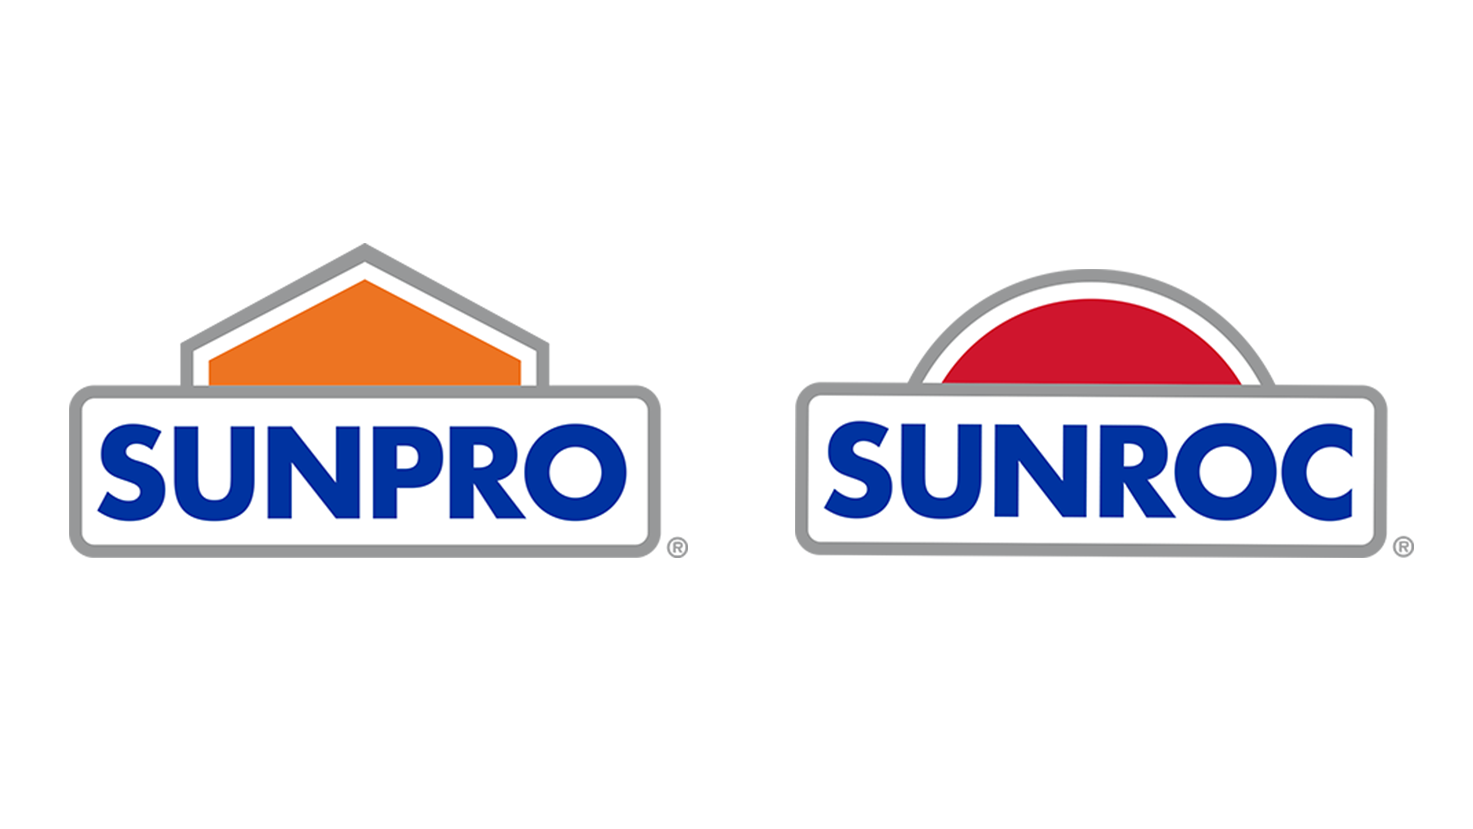 Sunpro-Sunroc Partnership